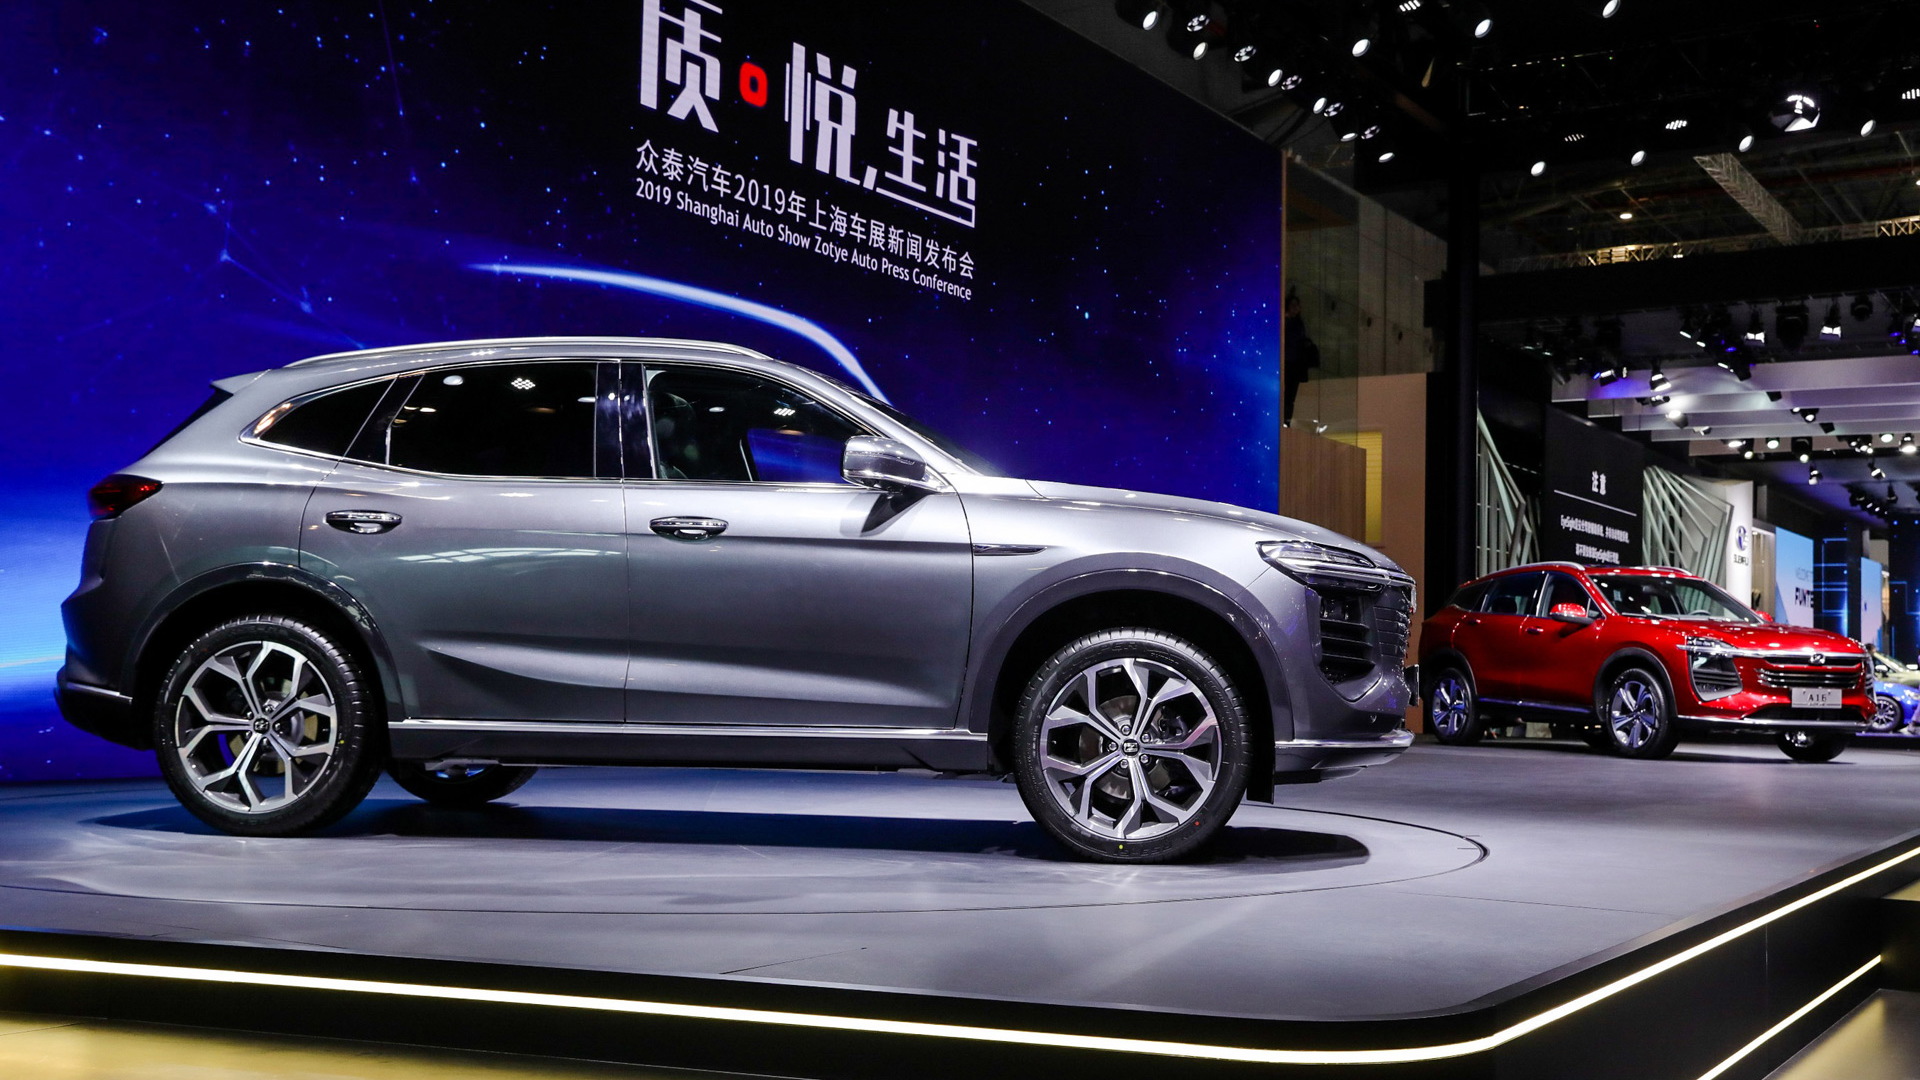 Zotye B21 and A16 concepts - 2019 Shanghai auto show